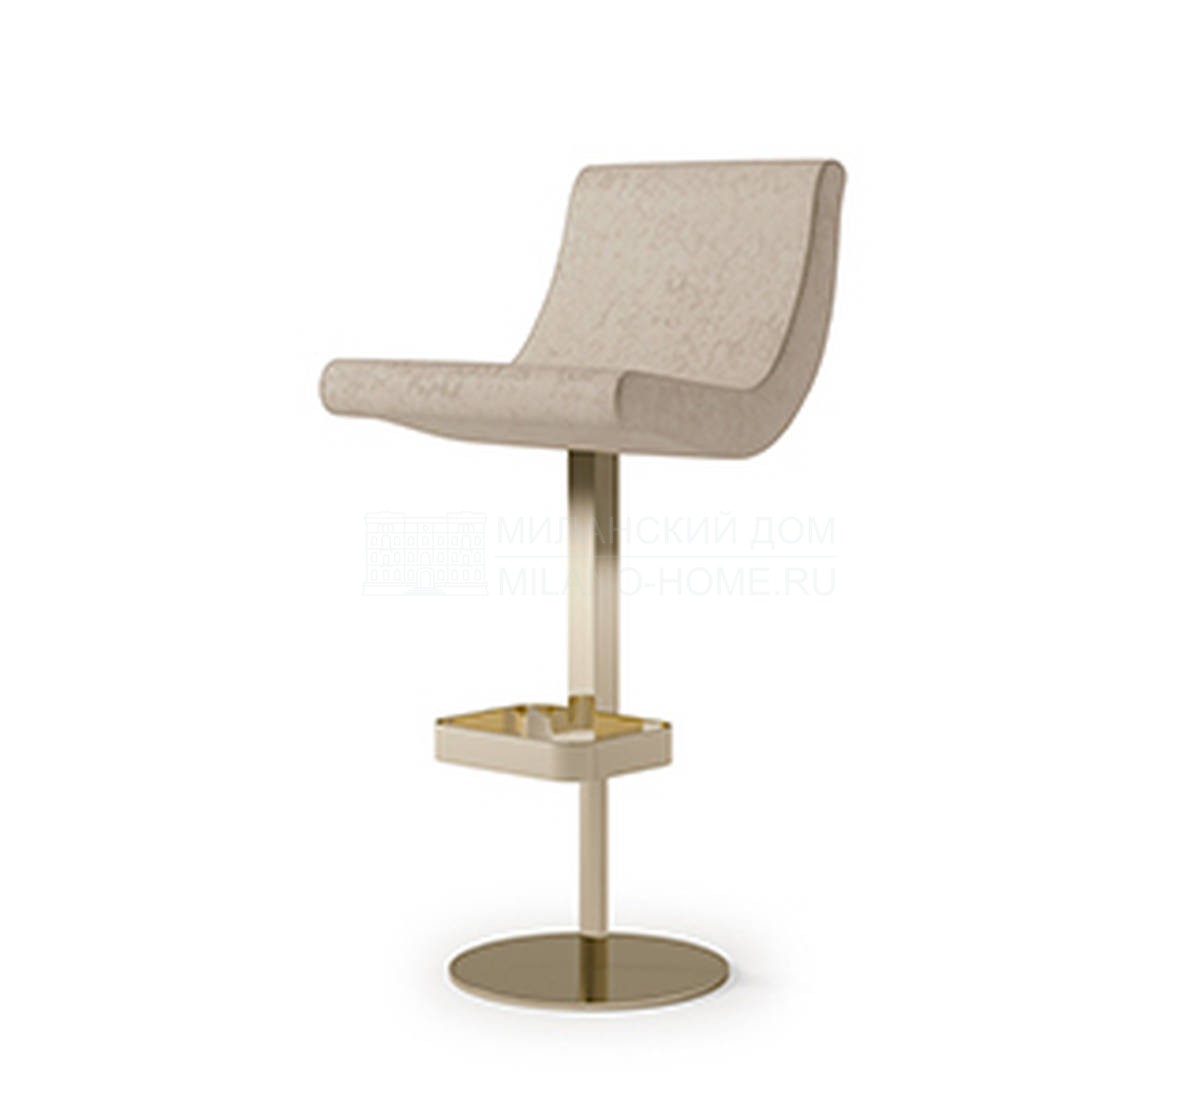 Барный стул Wave bar chair  / art. 6067 из Италии фабрики BIZZOTTO